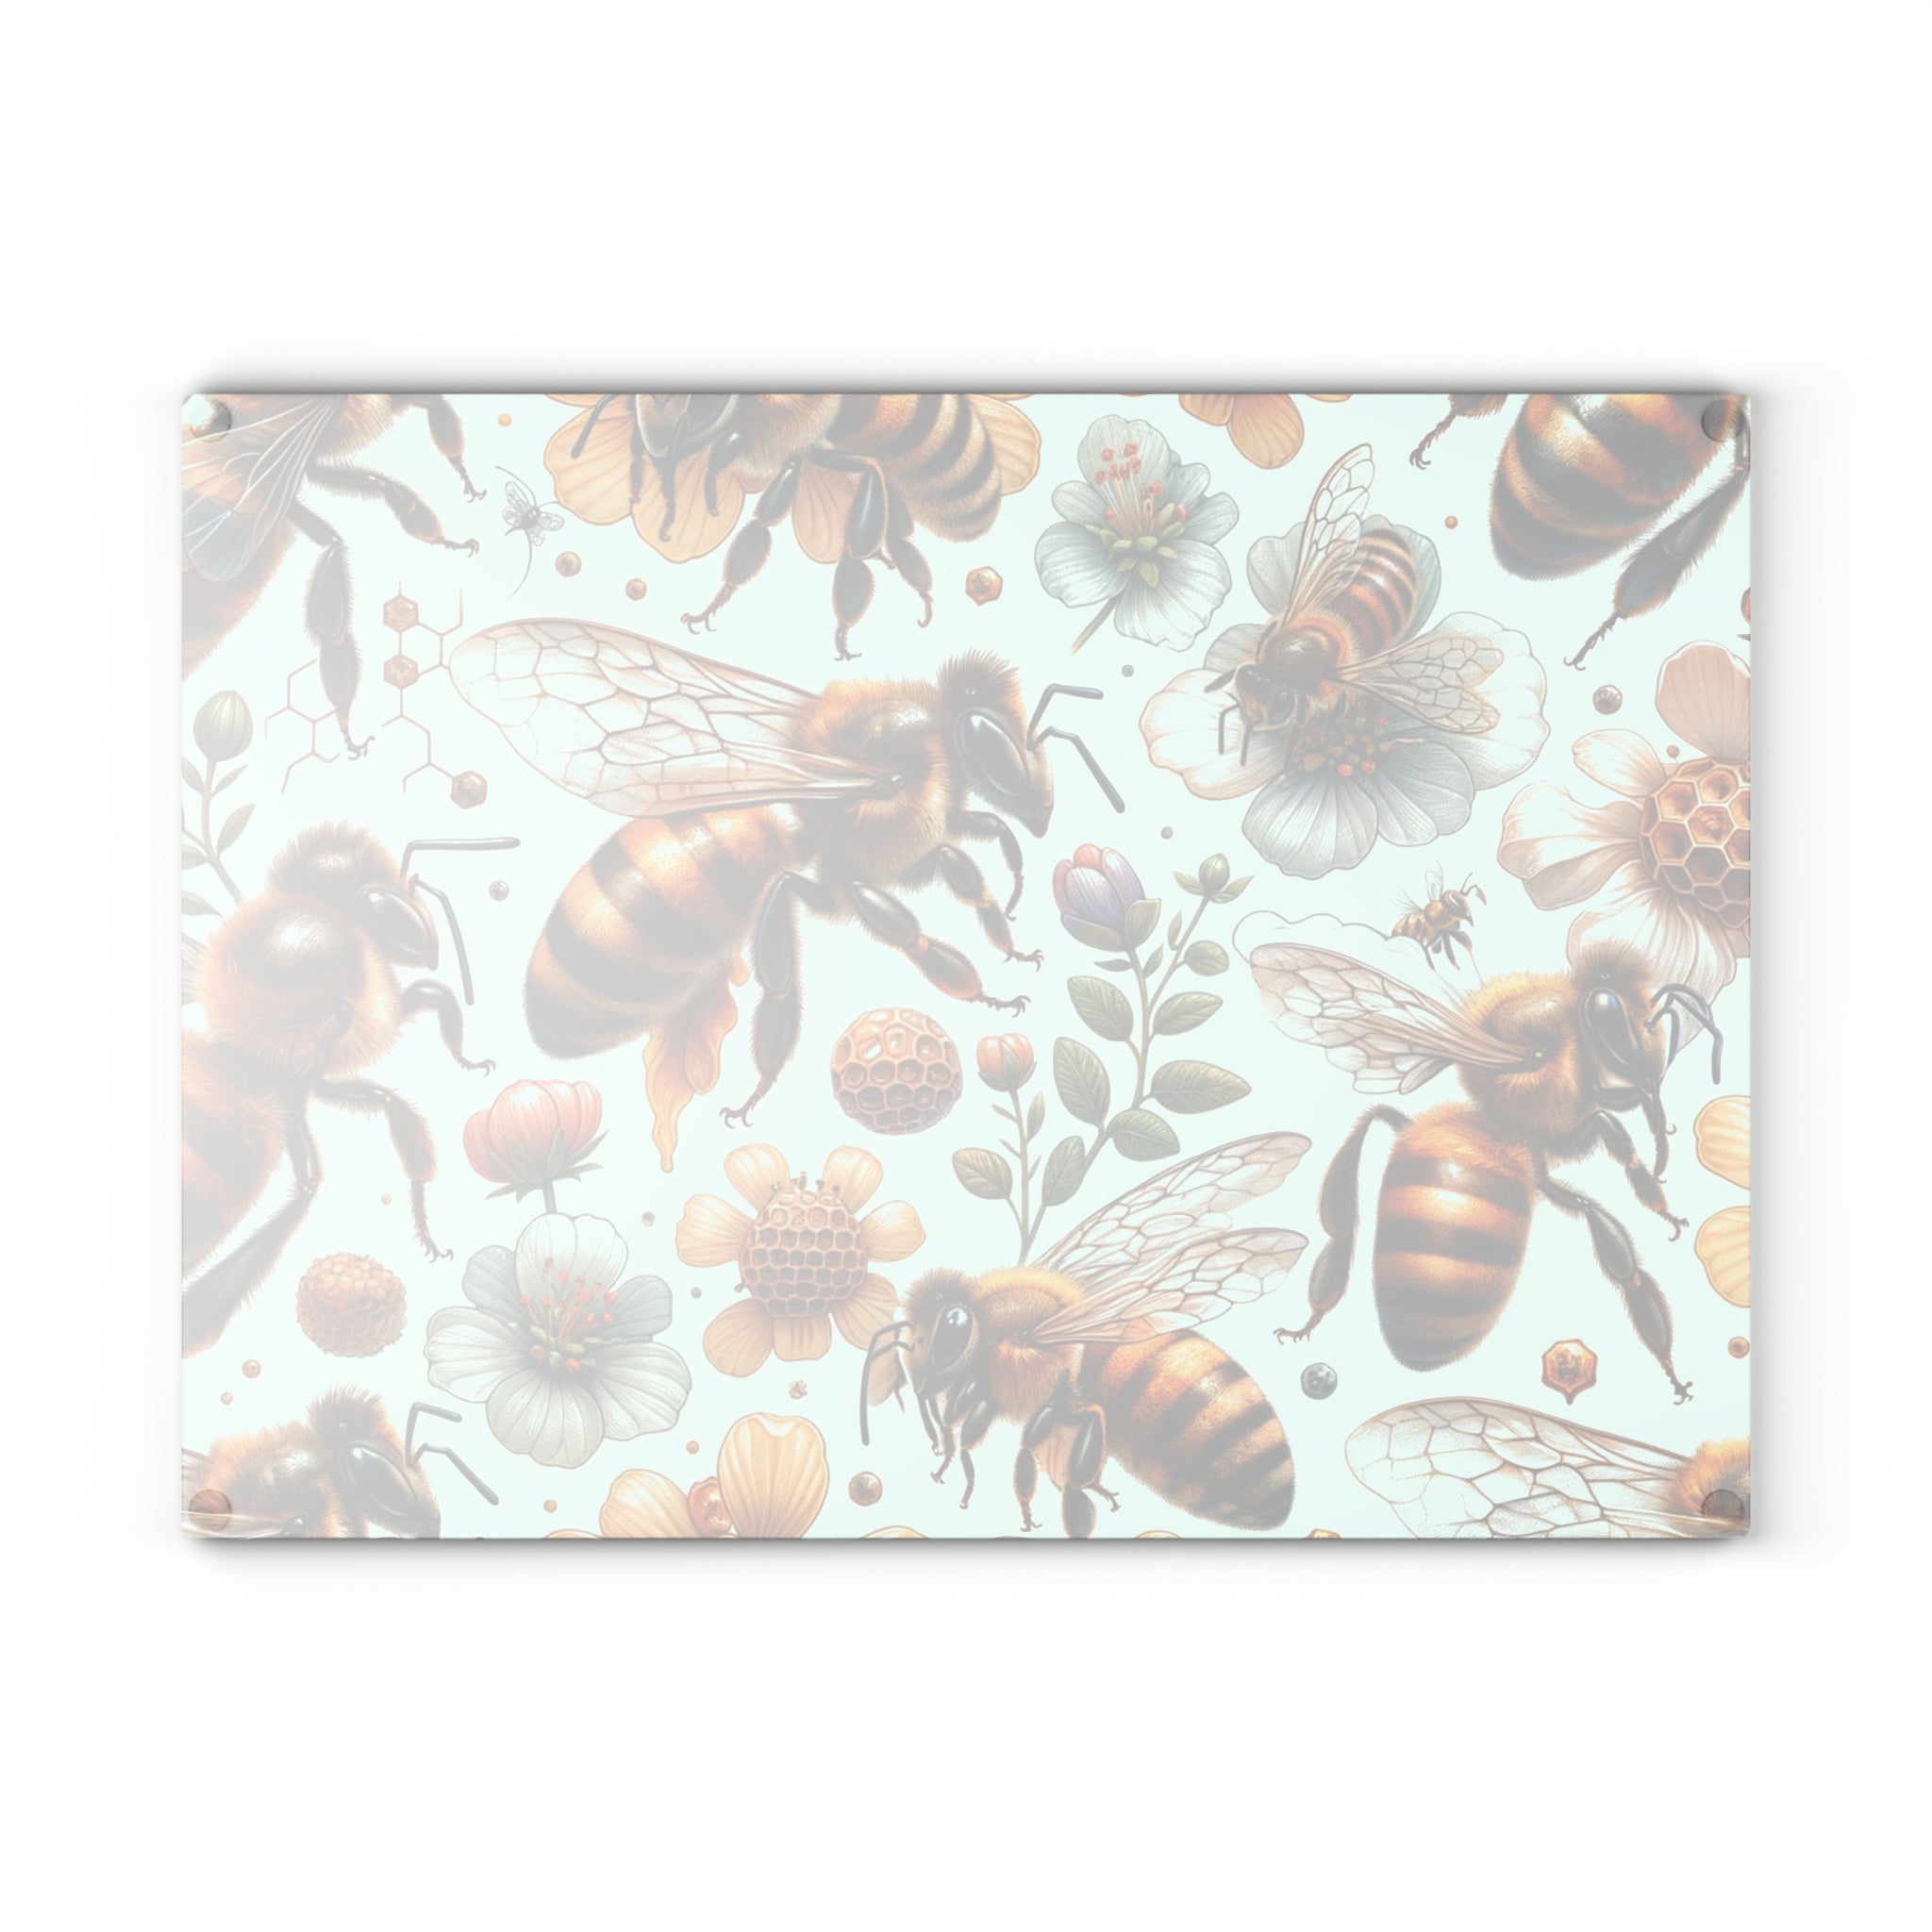 Bumble Bee Glass Cutting Board for Stylish Kitchen Decor